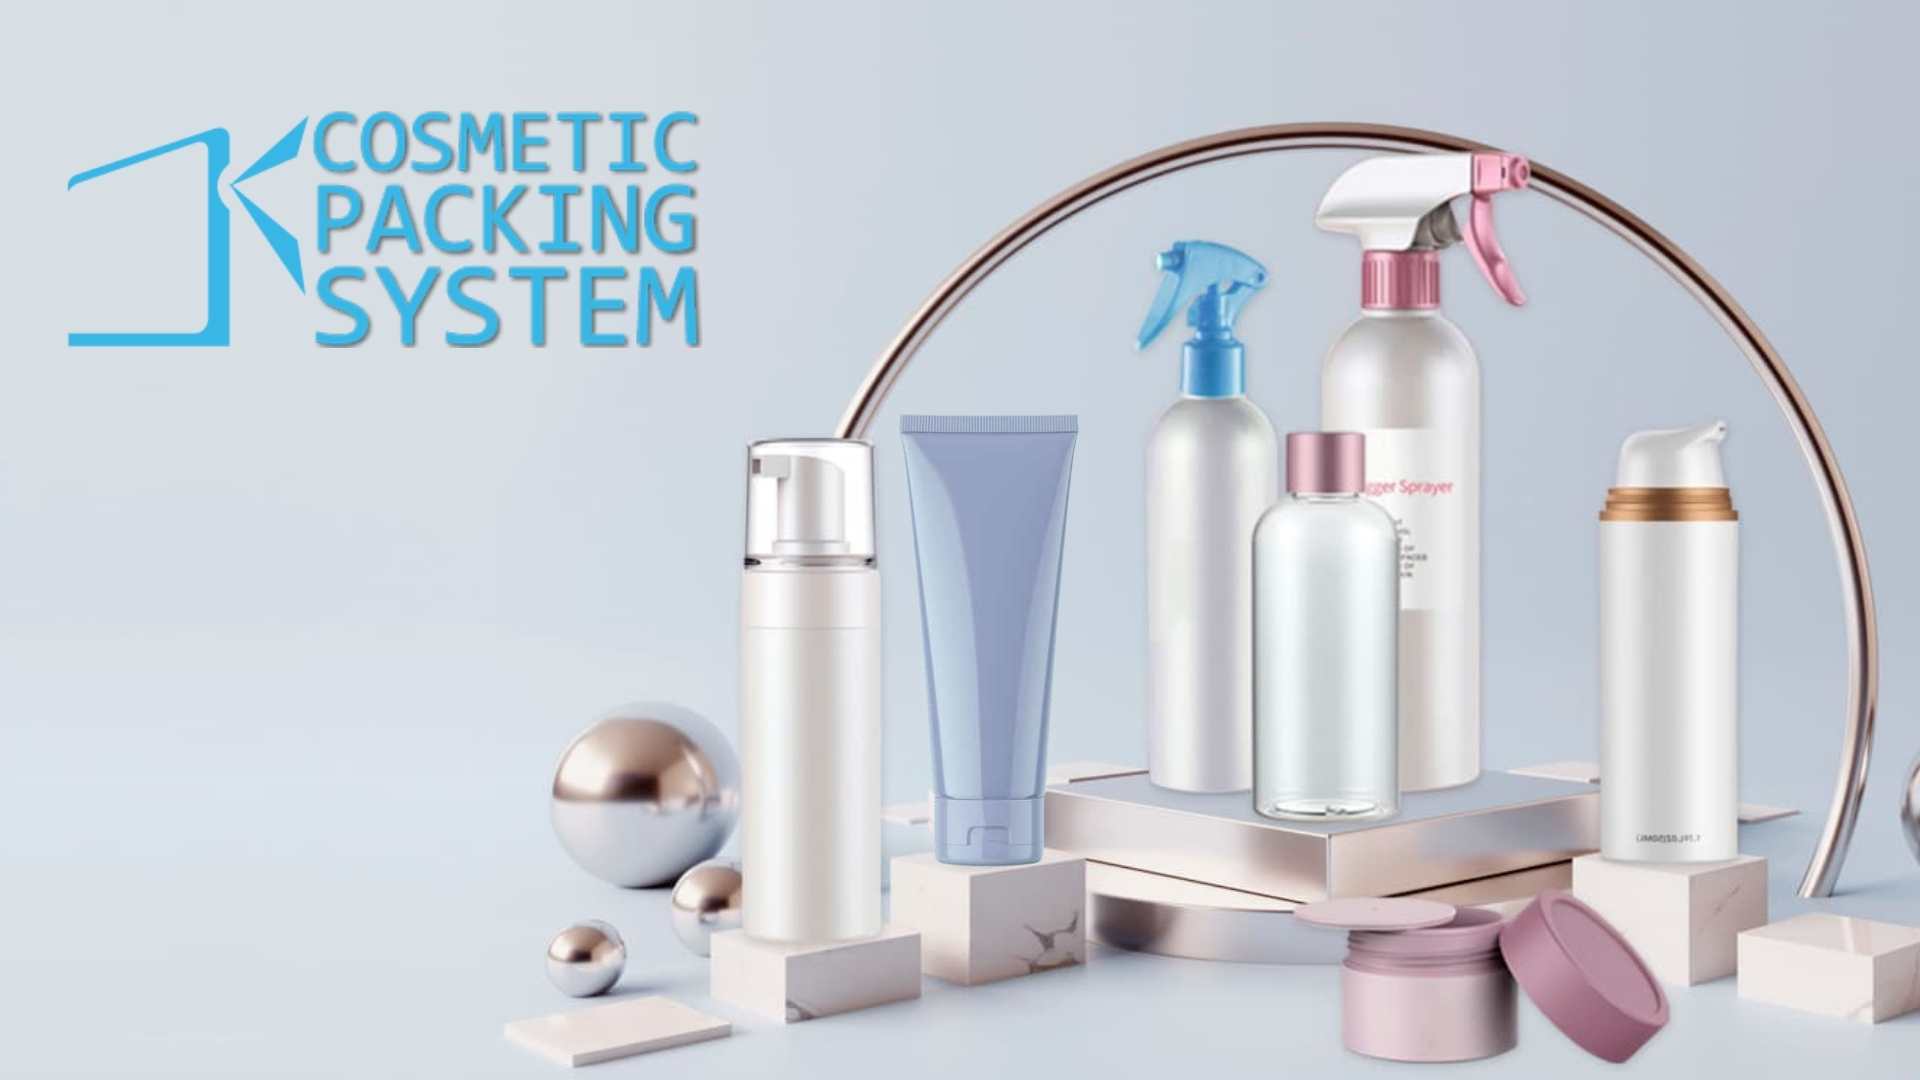 cosmeticpackingsystem.com